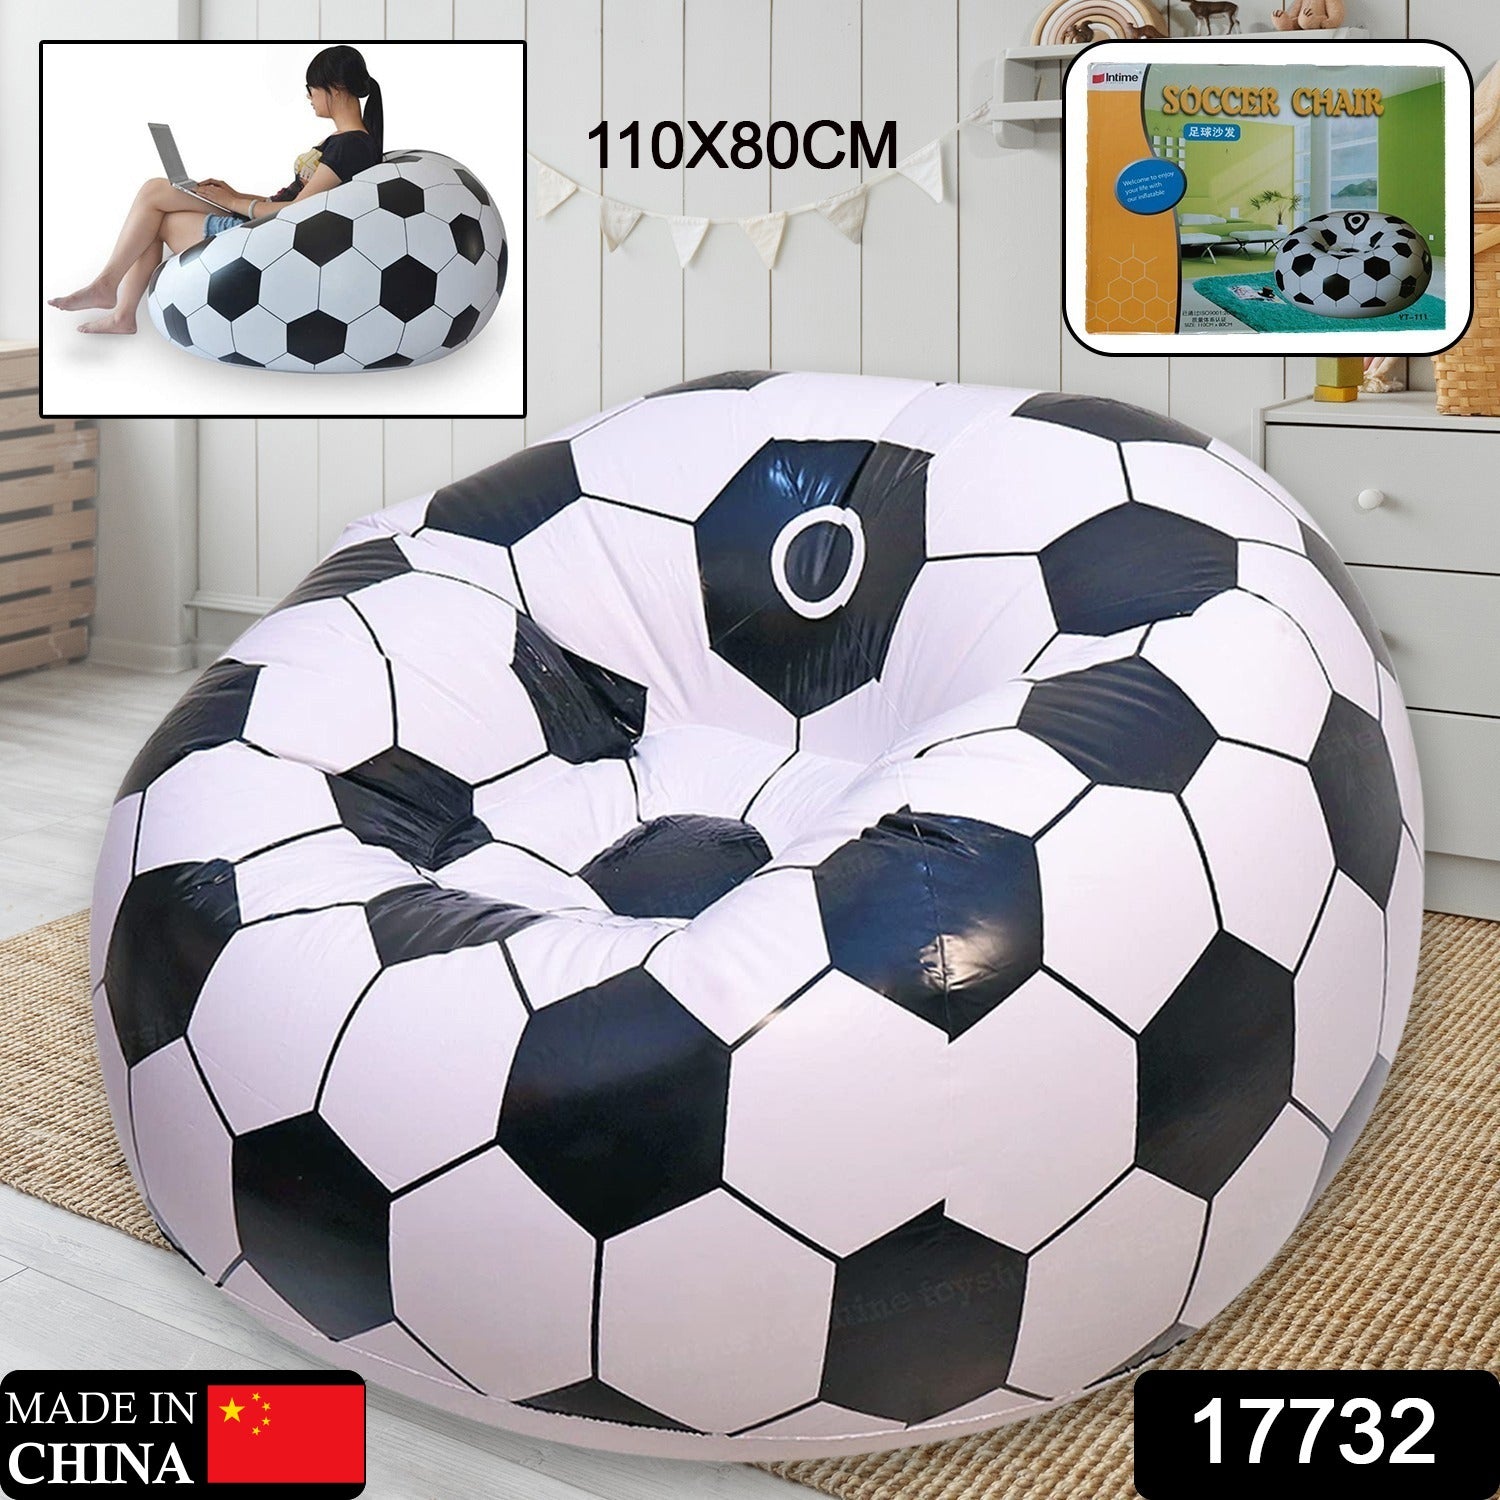 17732 Football Sofa, Cartoon Style Inflatable Folding Chair, Soccer Ball Chair, Inflatable Sofa for Adults, Kids size 110cm x 80cm